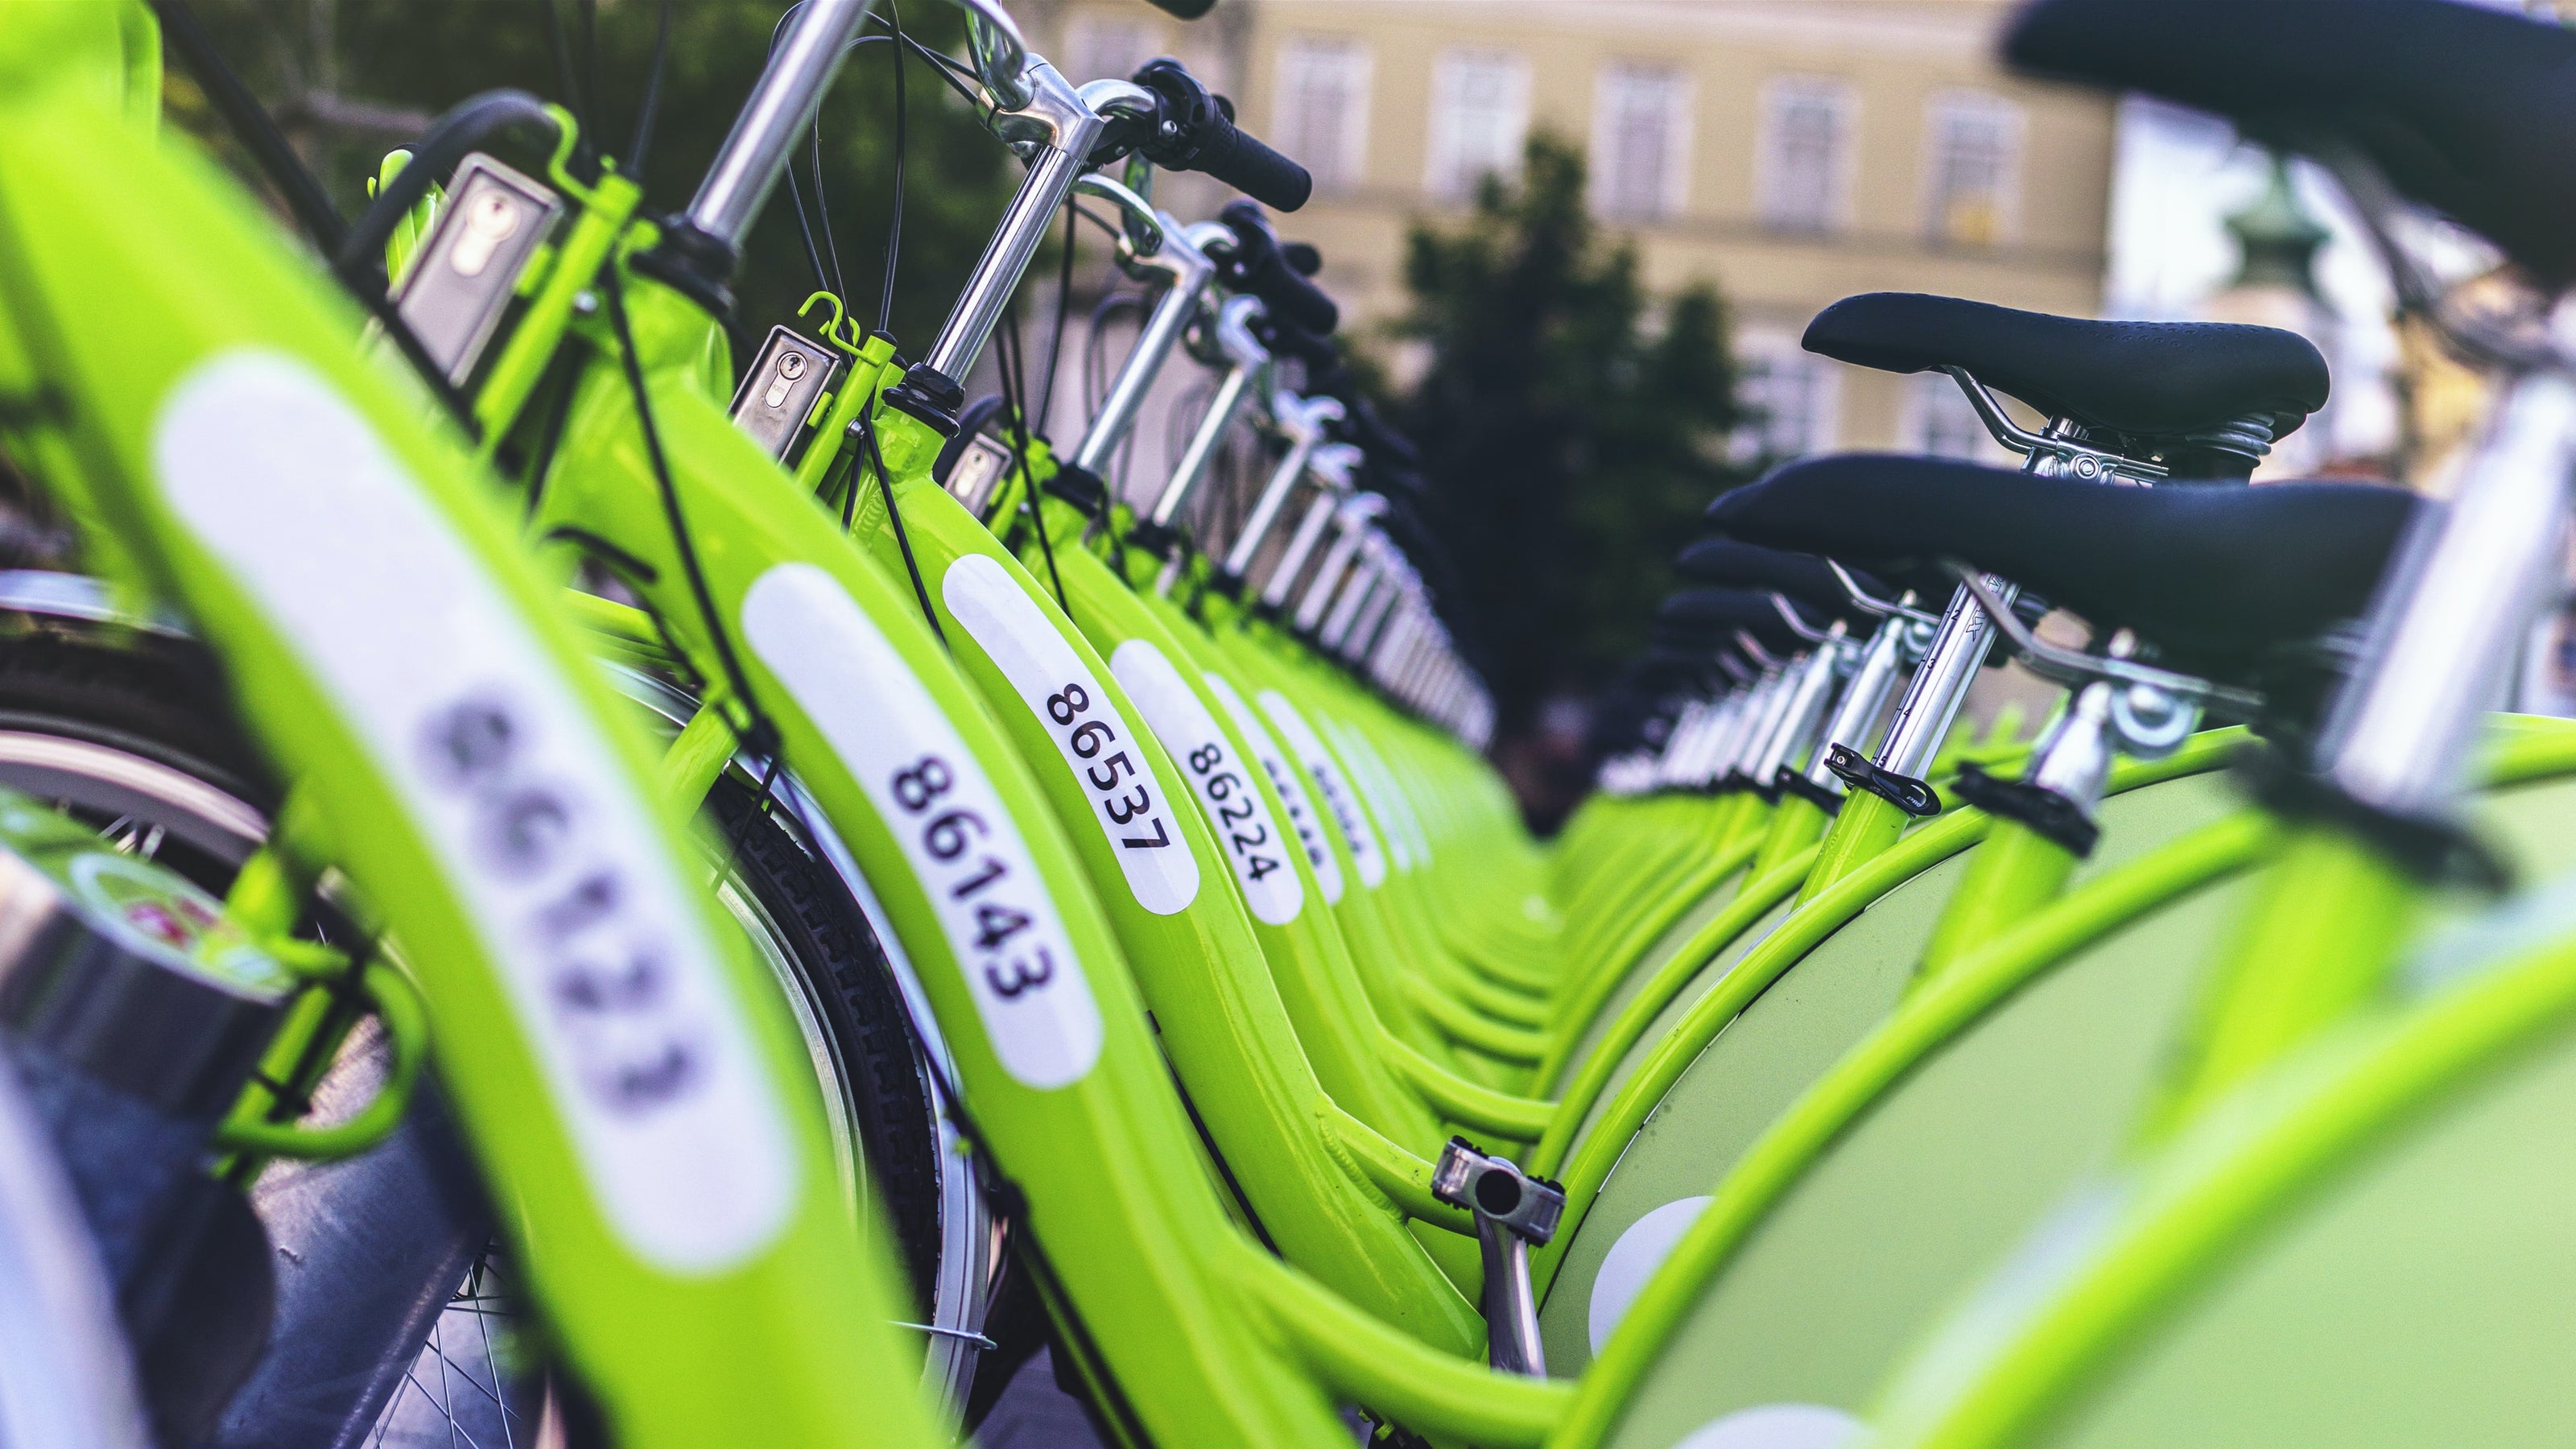 VIKTOR-KERI-UDGEXZTLX-E-UNSPLASH Best Sellers collection - green bikes in a row